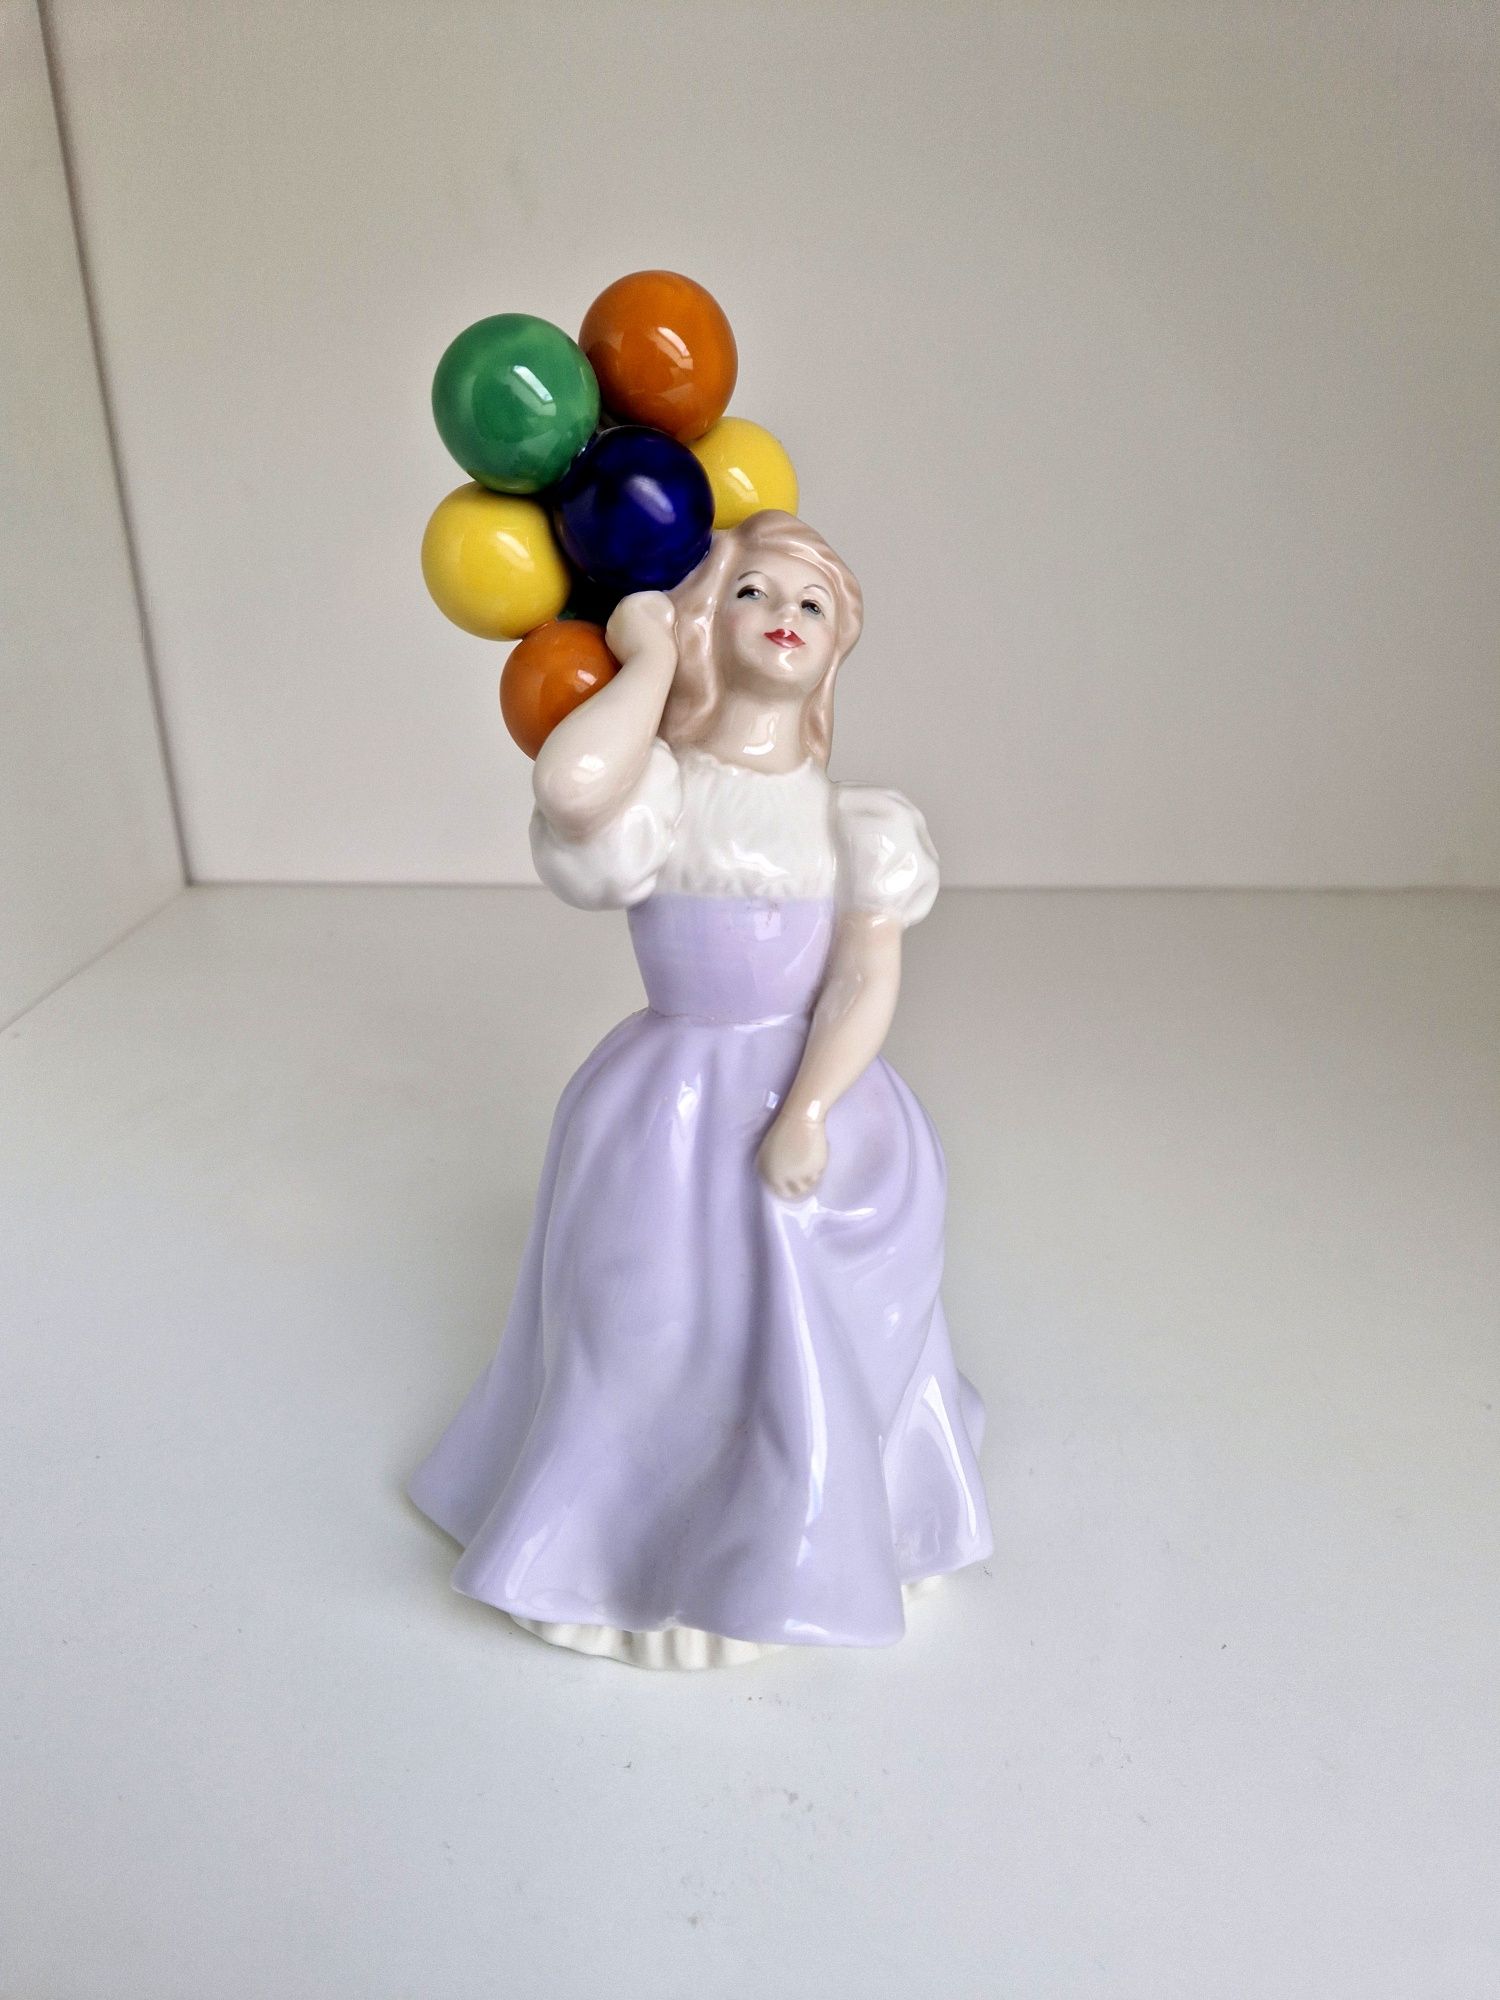 Figurka Royal doulton "Balloons"